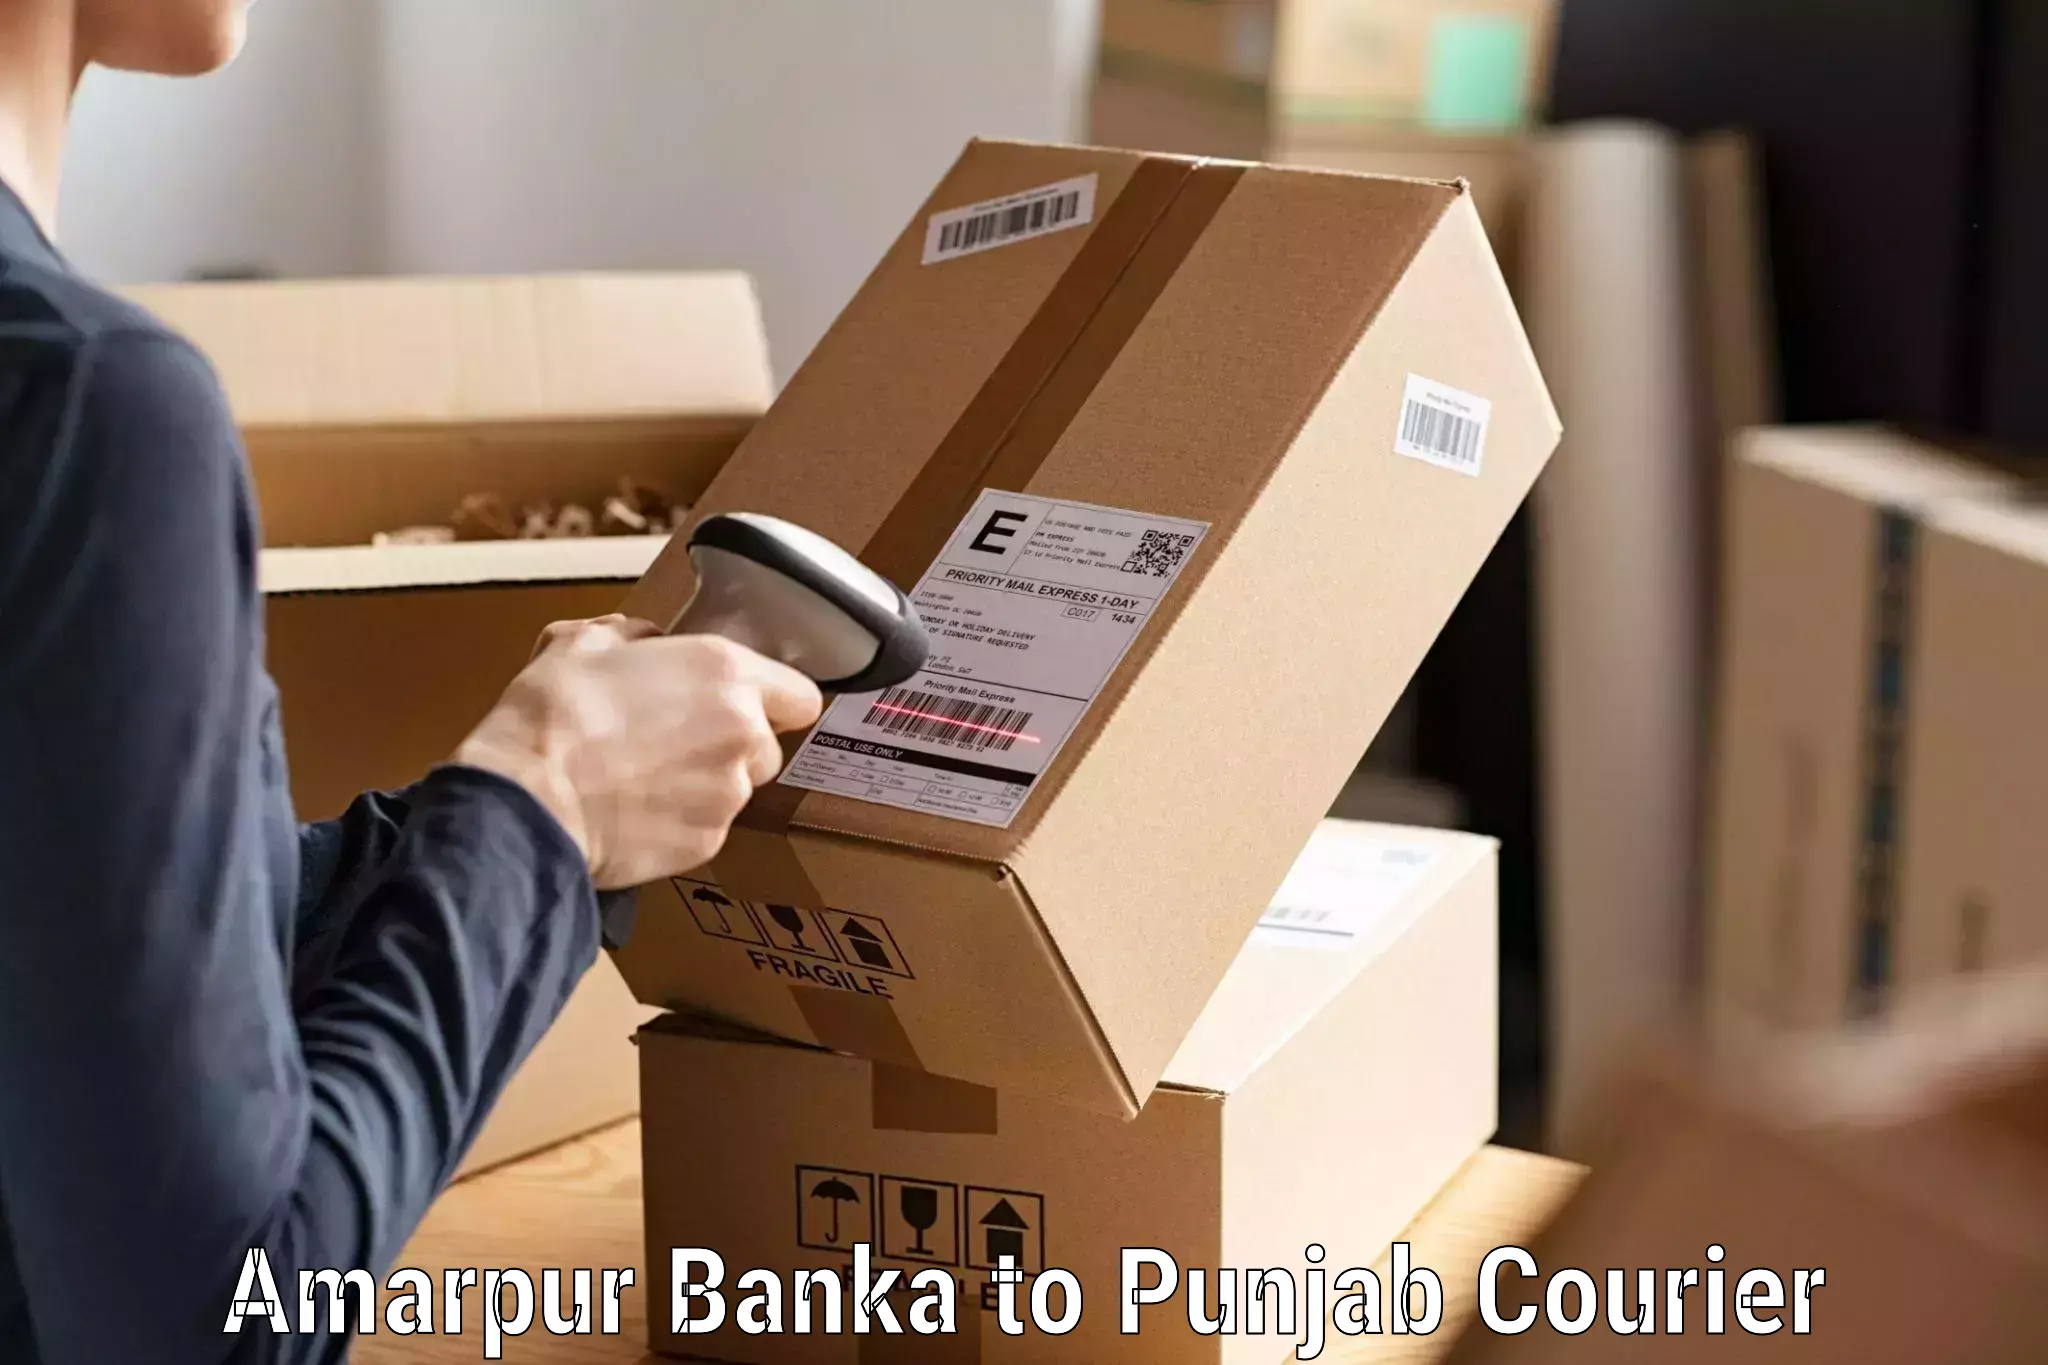 Courier service booking Amarpur Banka to IIT Ropar